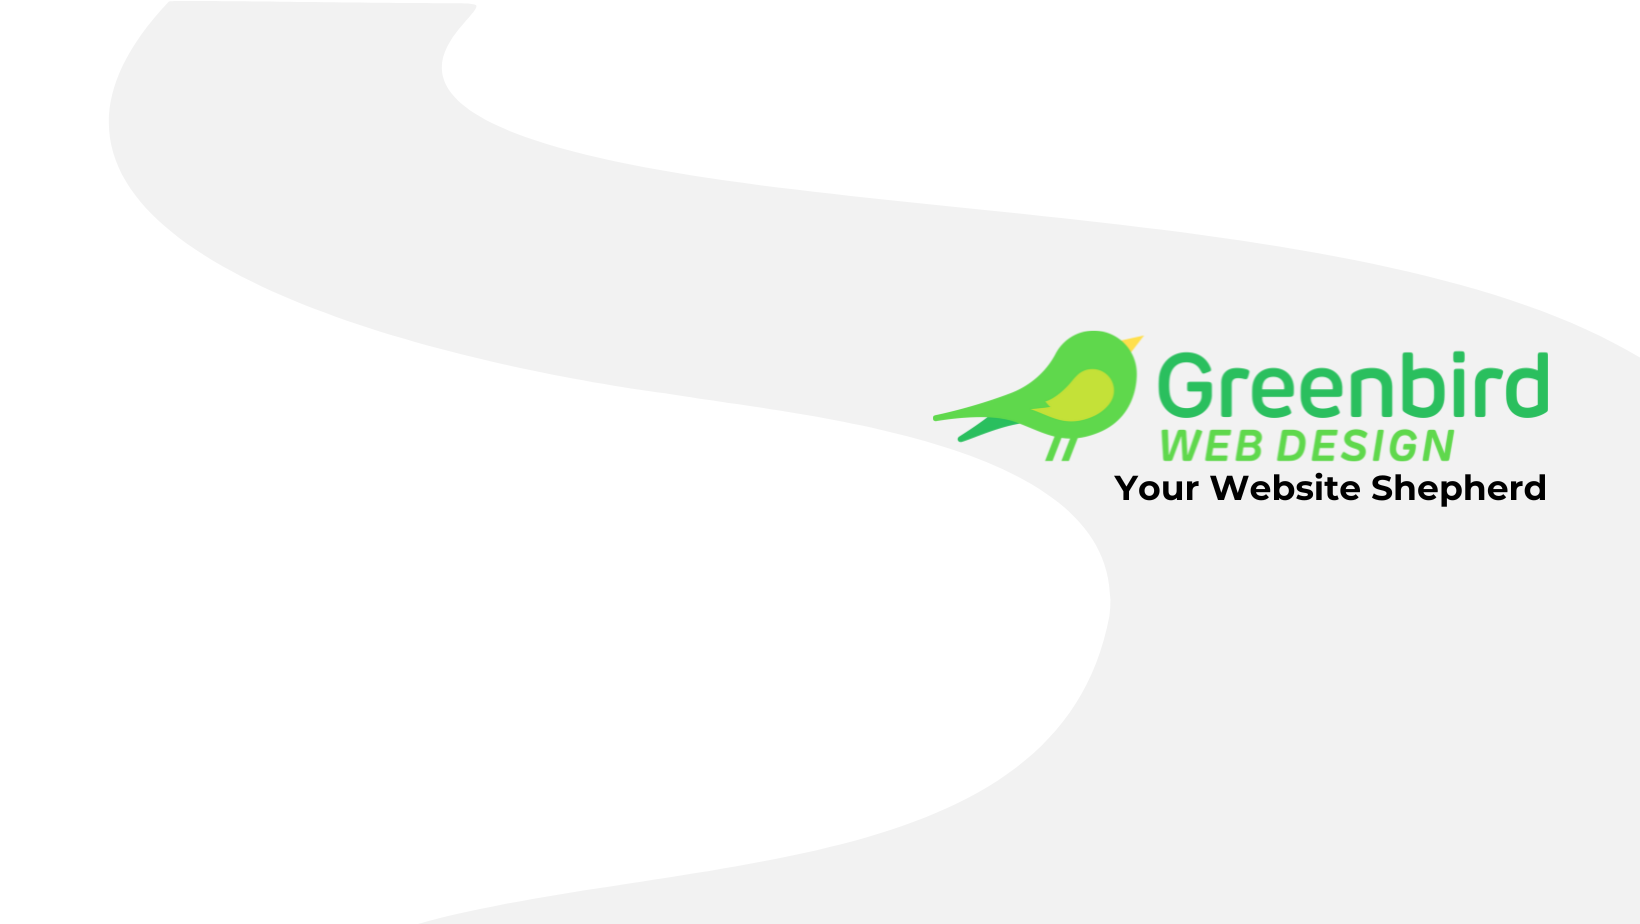 GREENBIRD WEB DESIGN